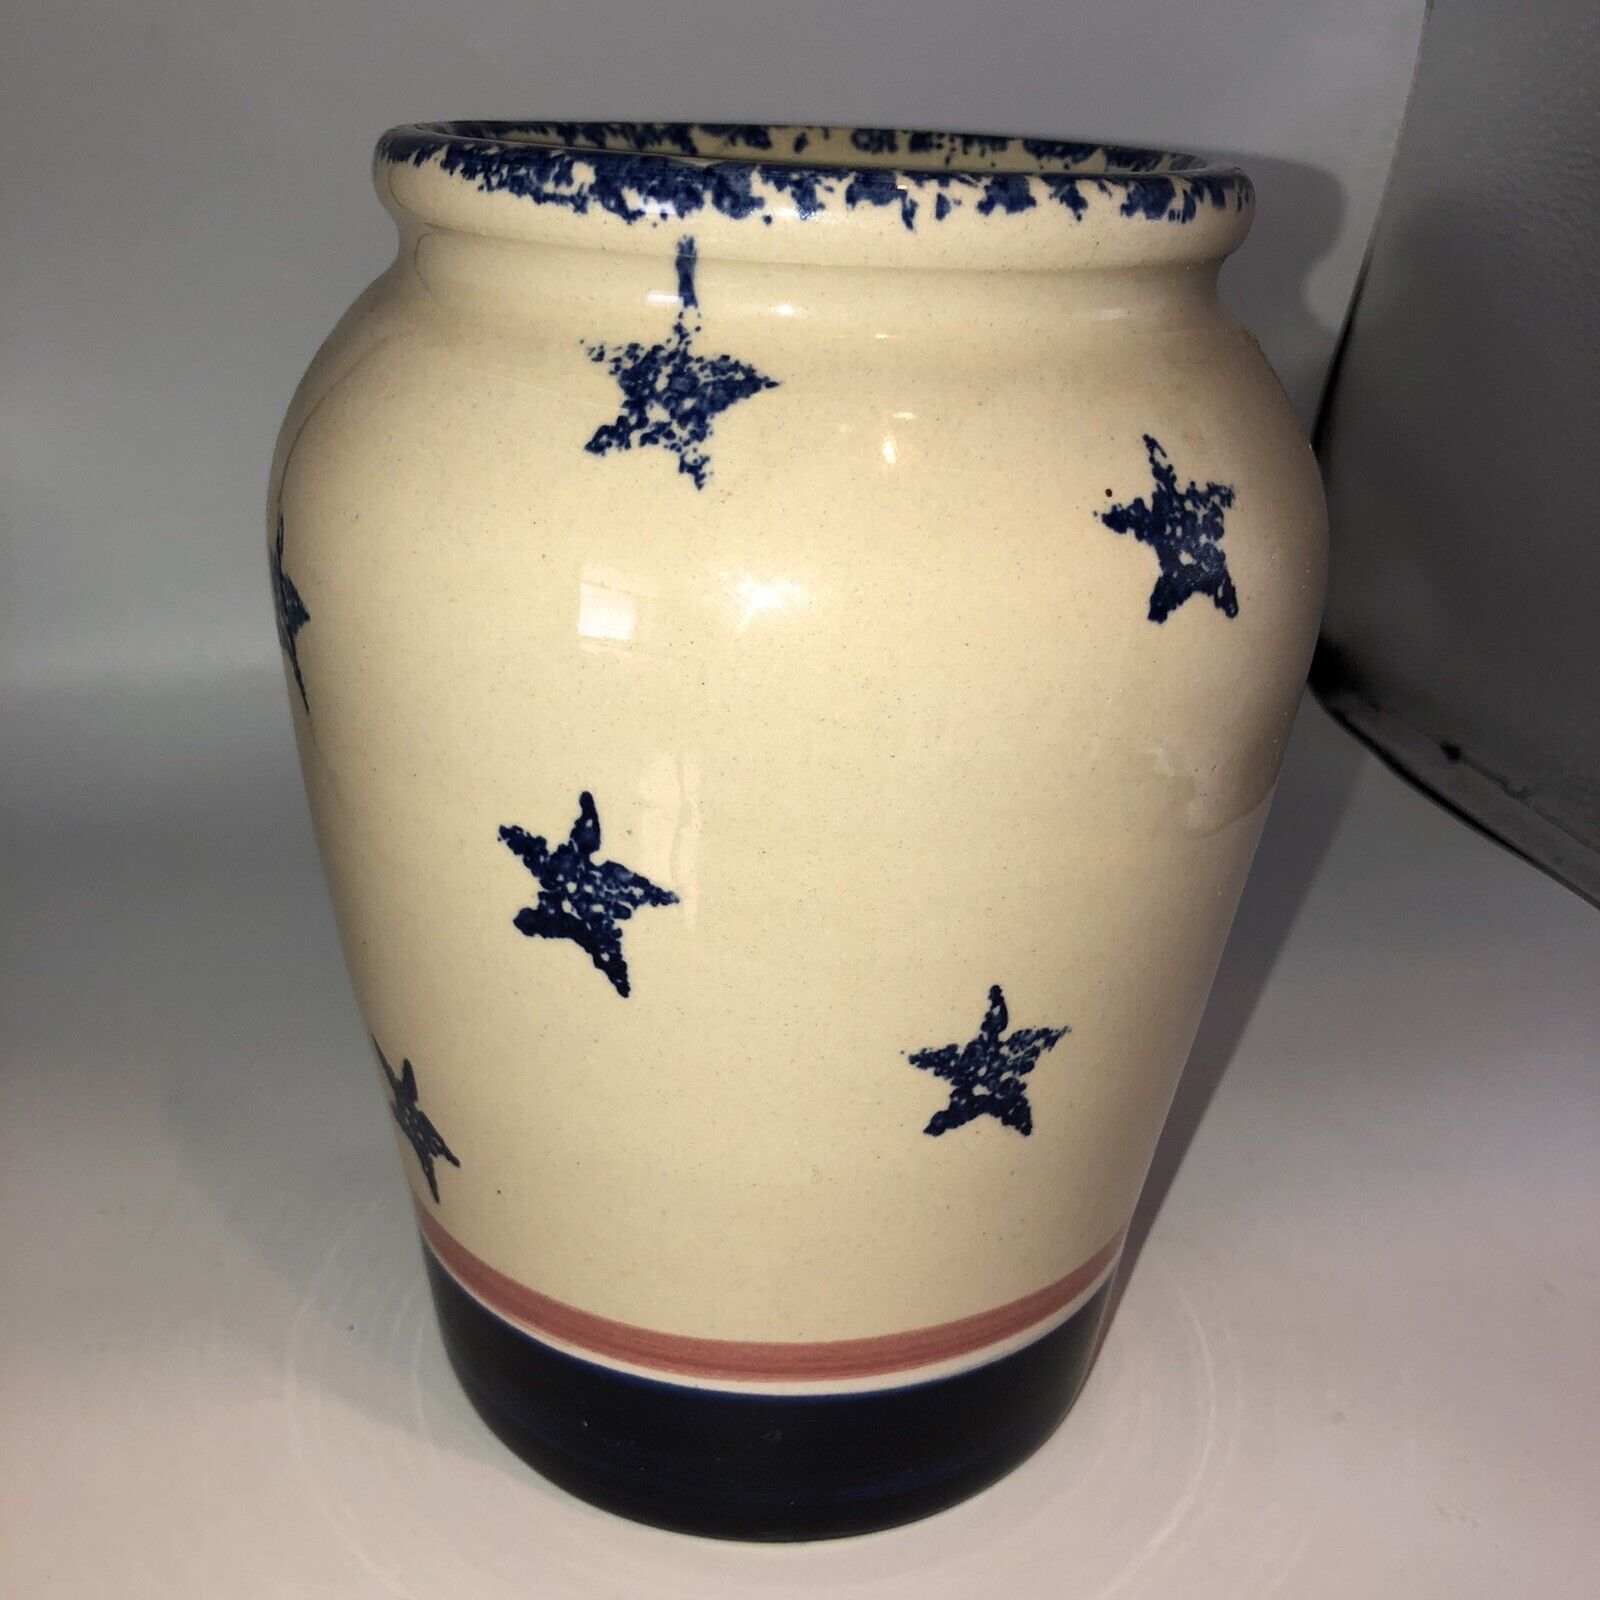 Yesteryears Marshall Stars Pottery Crock Nice Vase Or Utensils Holder Fun